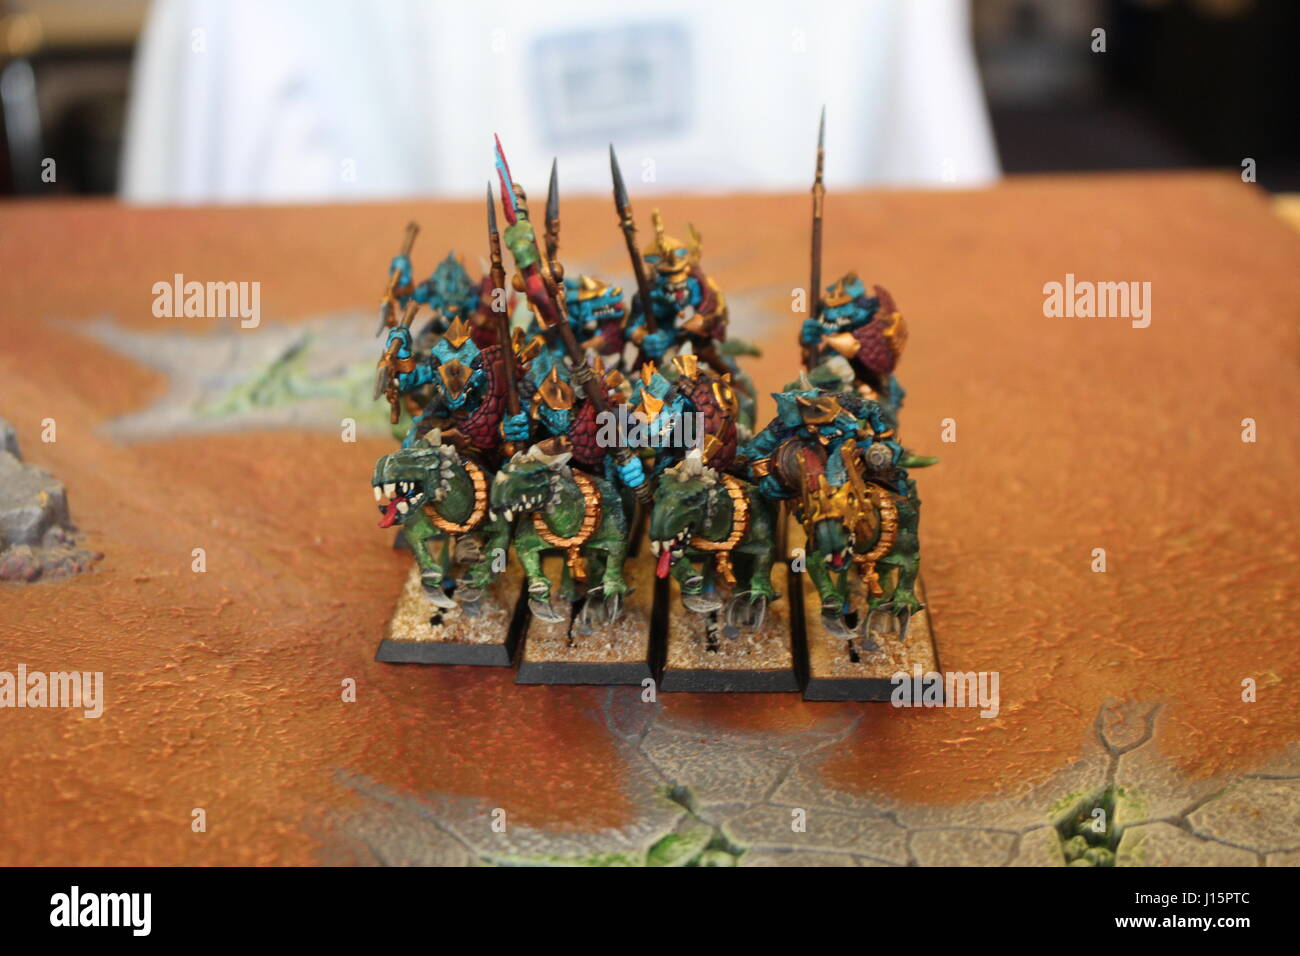 Warhammer figures Stock Photo